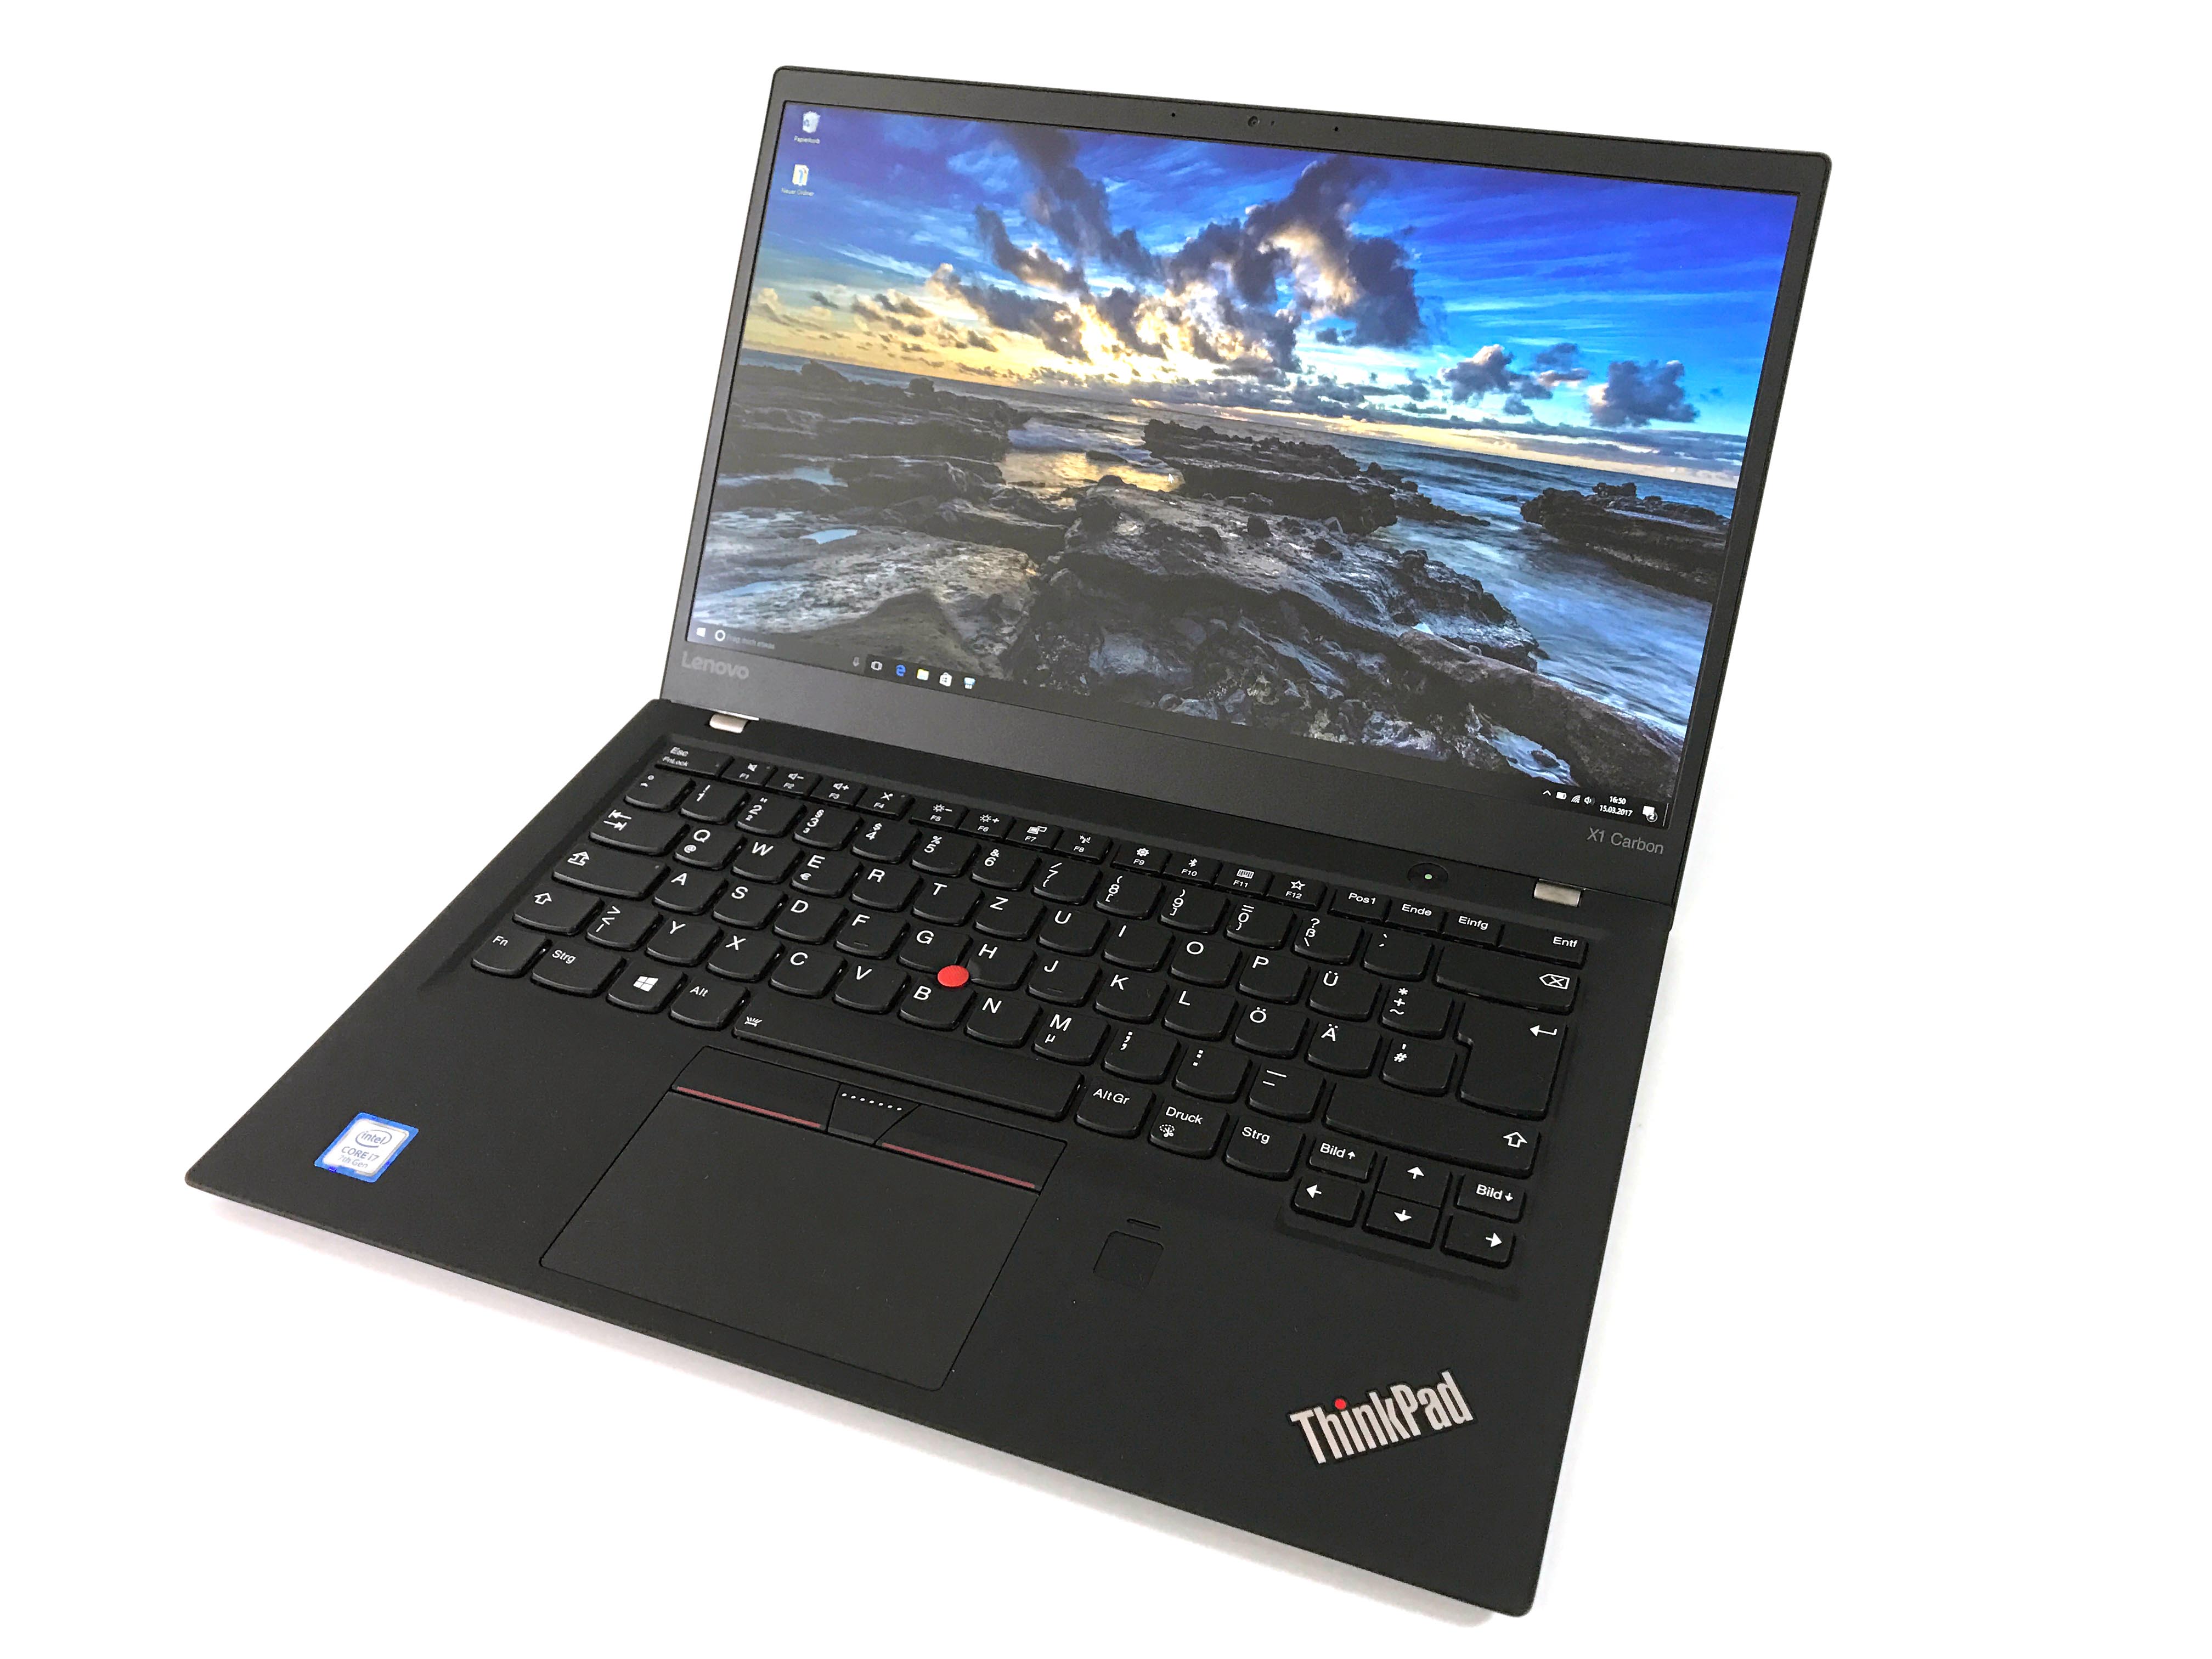 ThinkPad x1 carbon 2017 5th